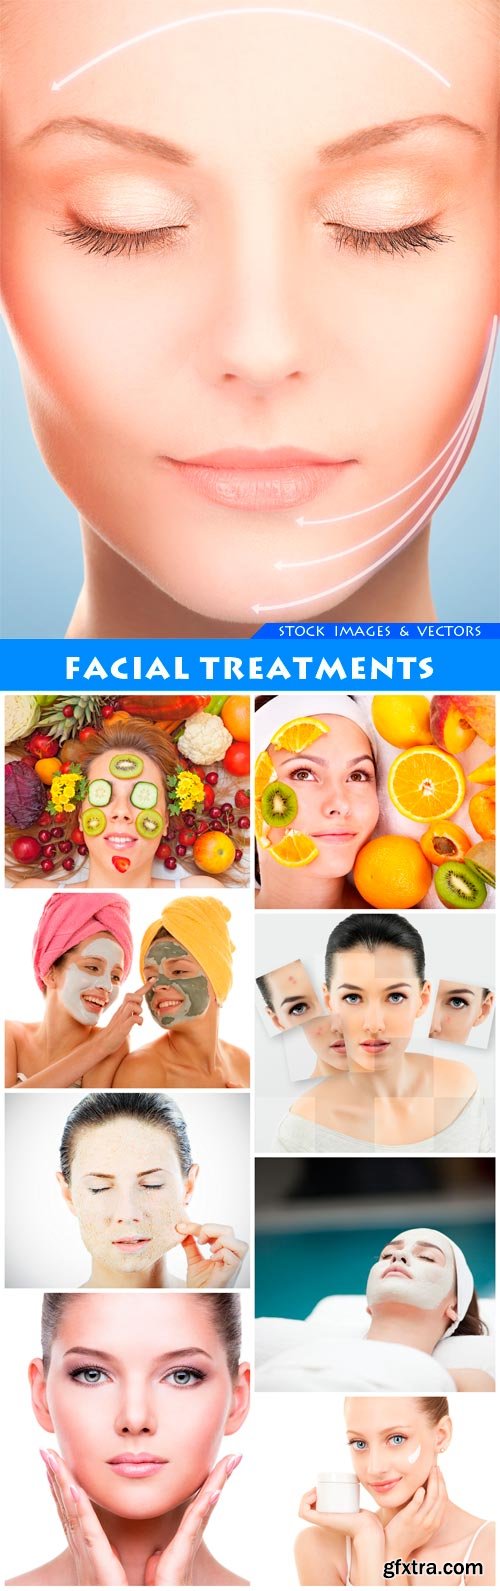 Facial Treatments 9X JPEG